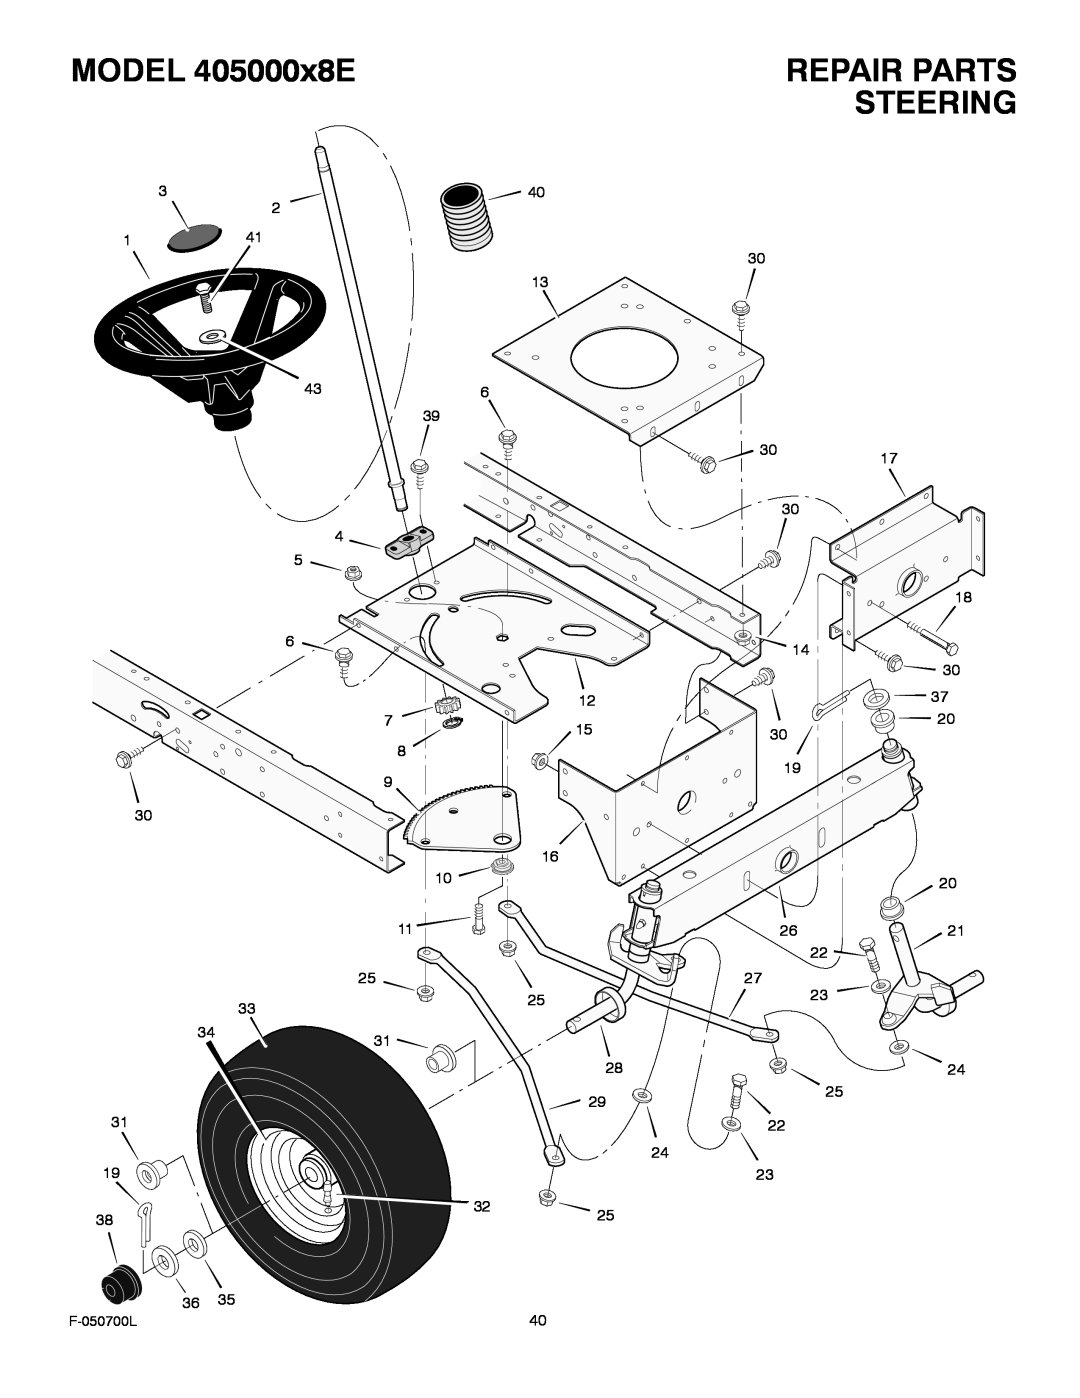 Murray manual Steering, MODEL 405000x8E, Repair Parts, F-050700L 